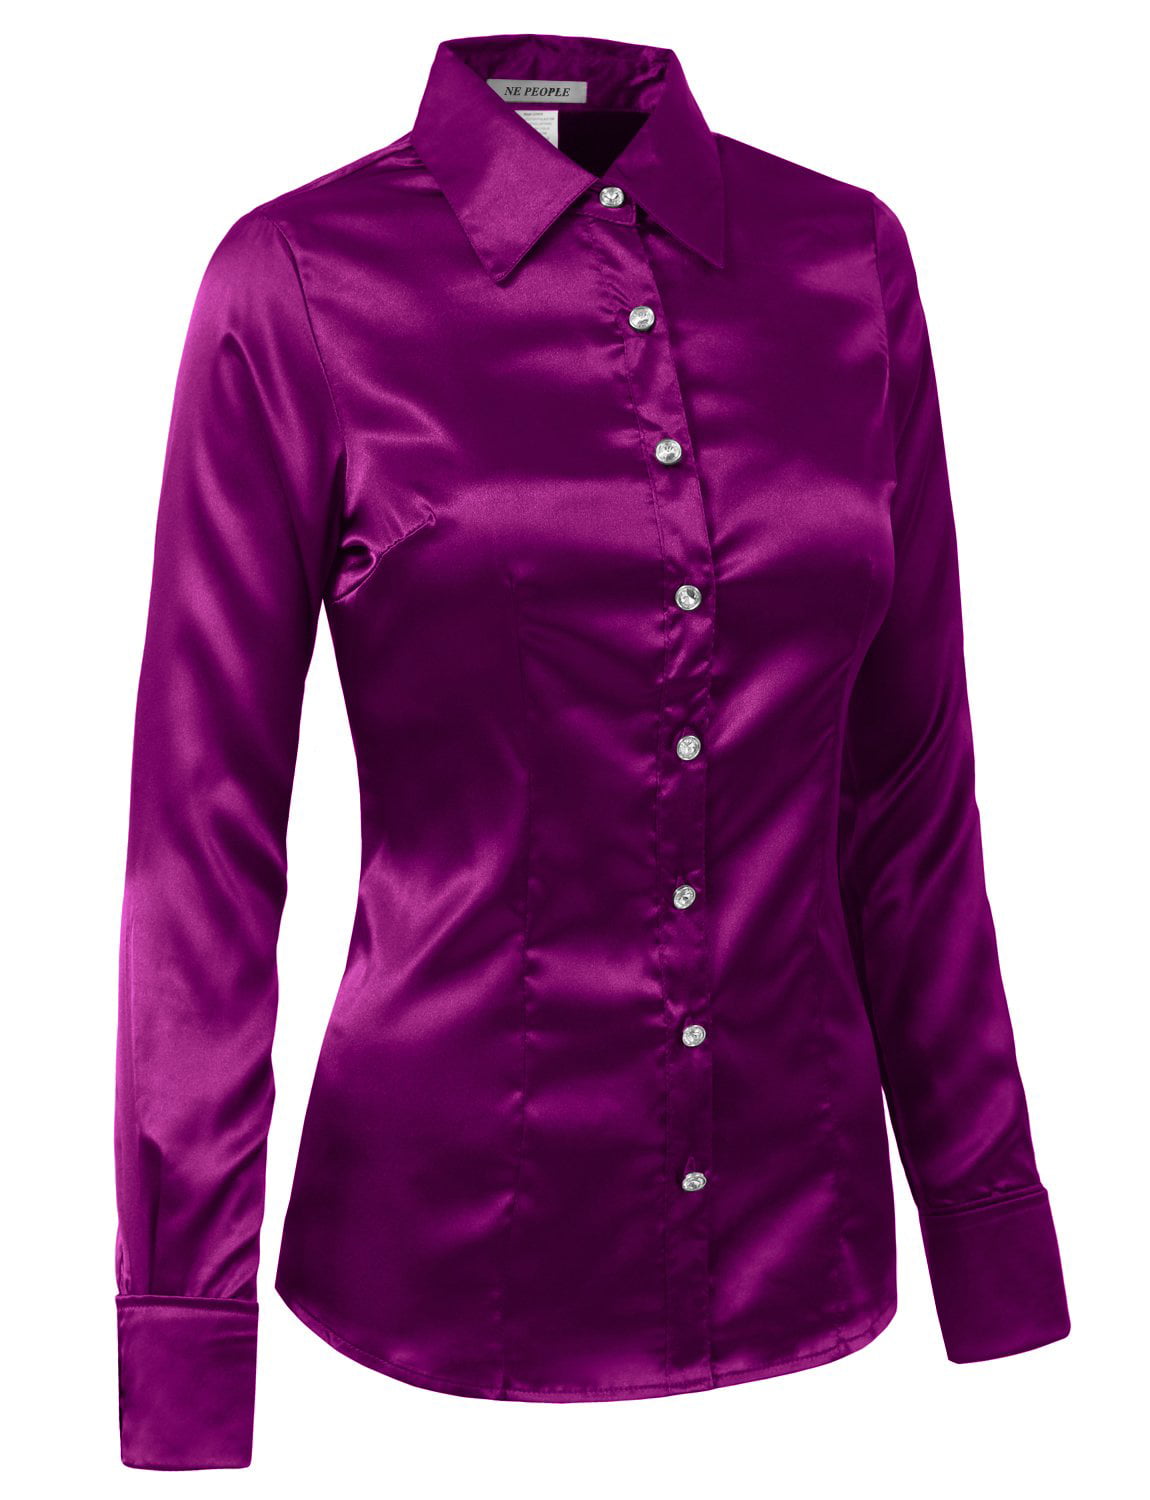 J. METHOD Women's Satin Button Down Shirt Long Cuff Sleeve Collar Silky  Office Work Formal Casual Blouse Top NEWT74 Fuchsia M 